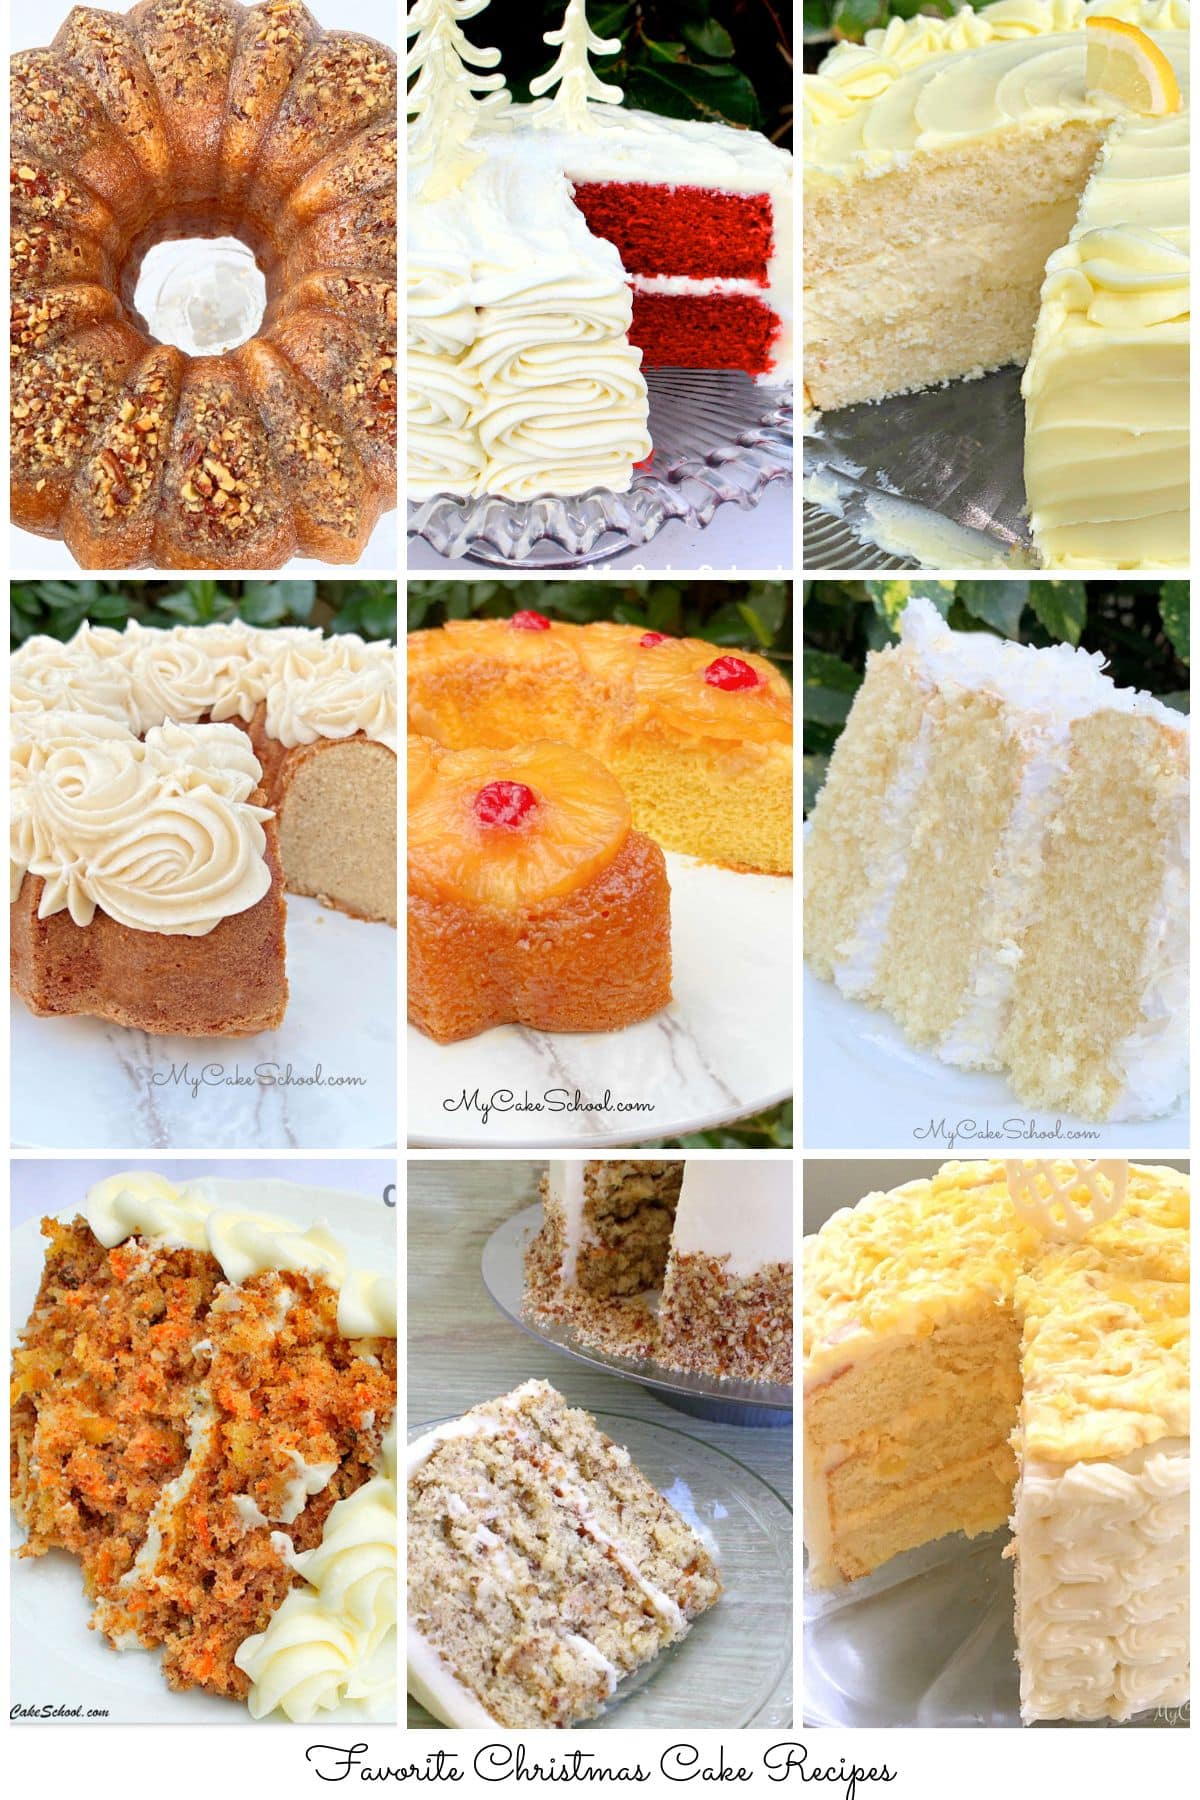 Top ten favorite Christmas Cake Recipes collage.